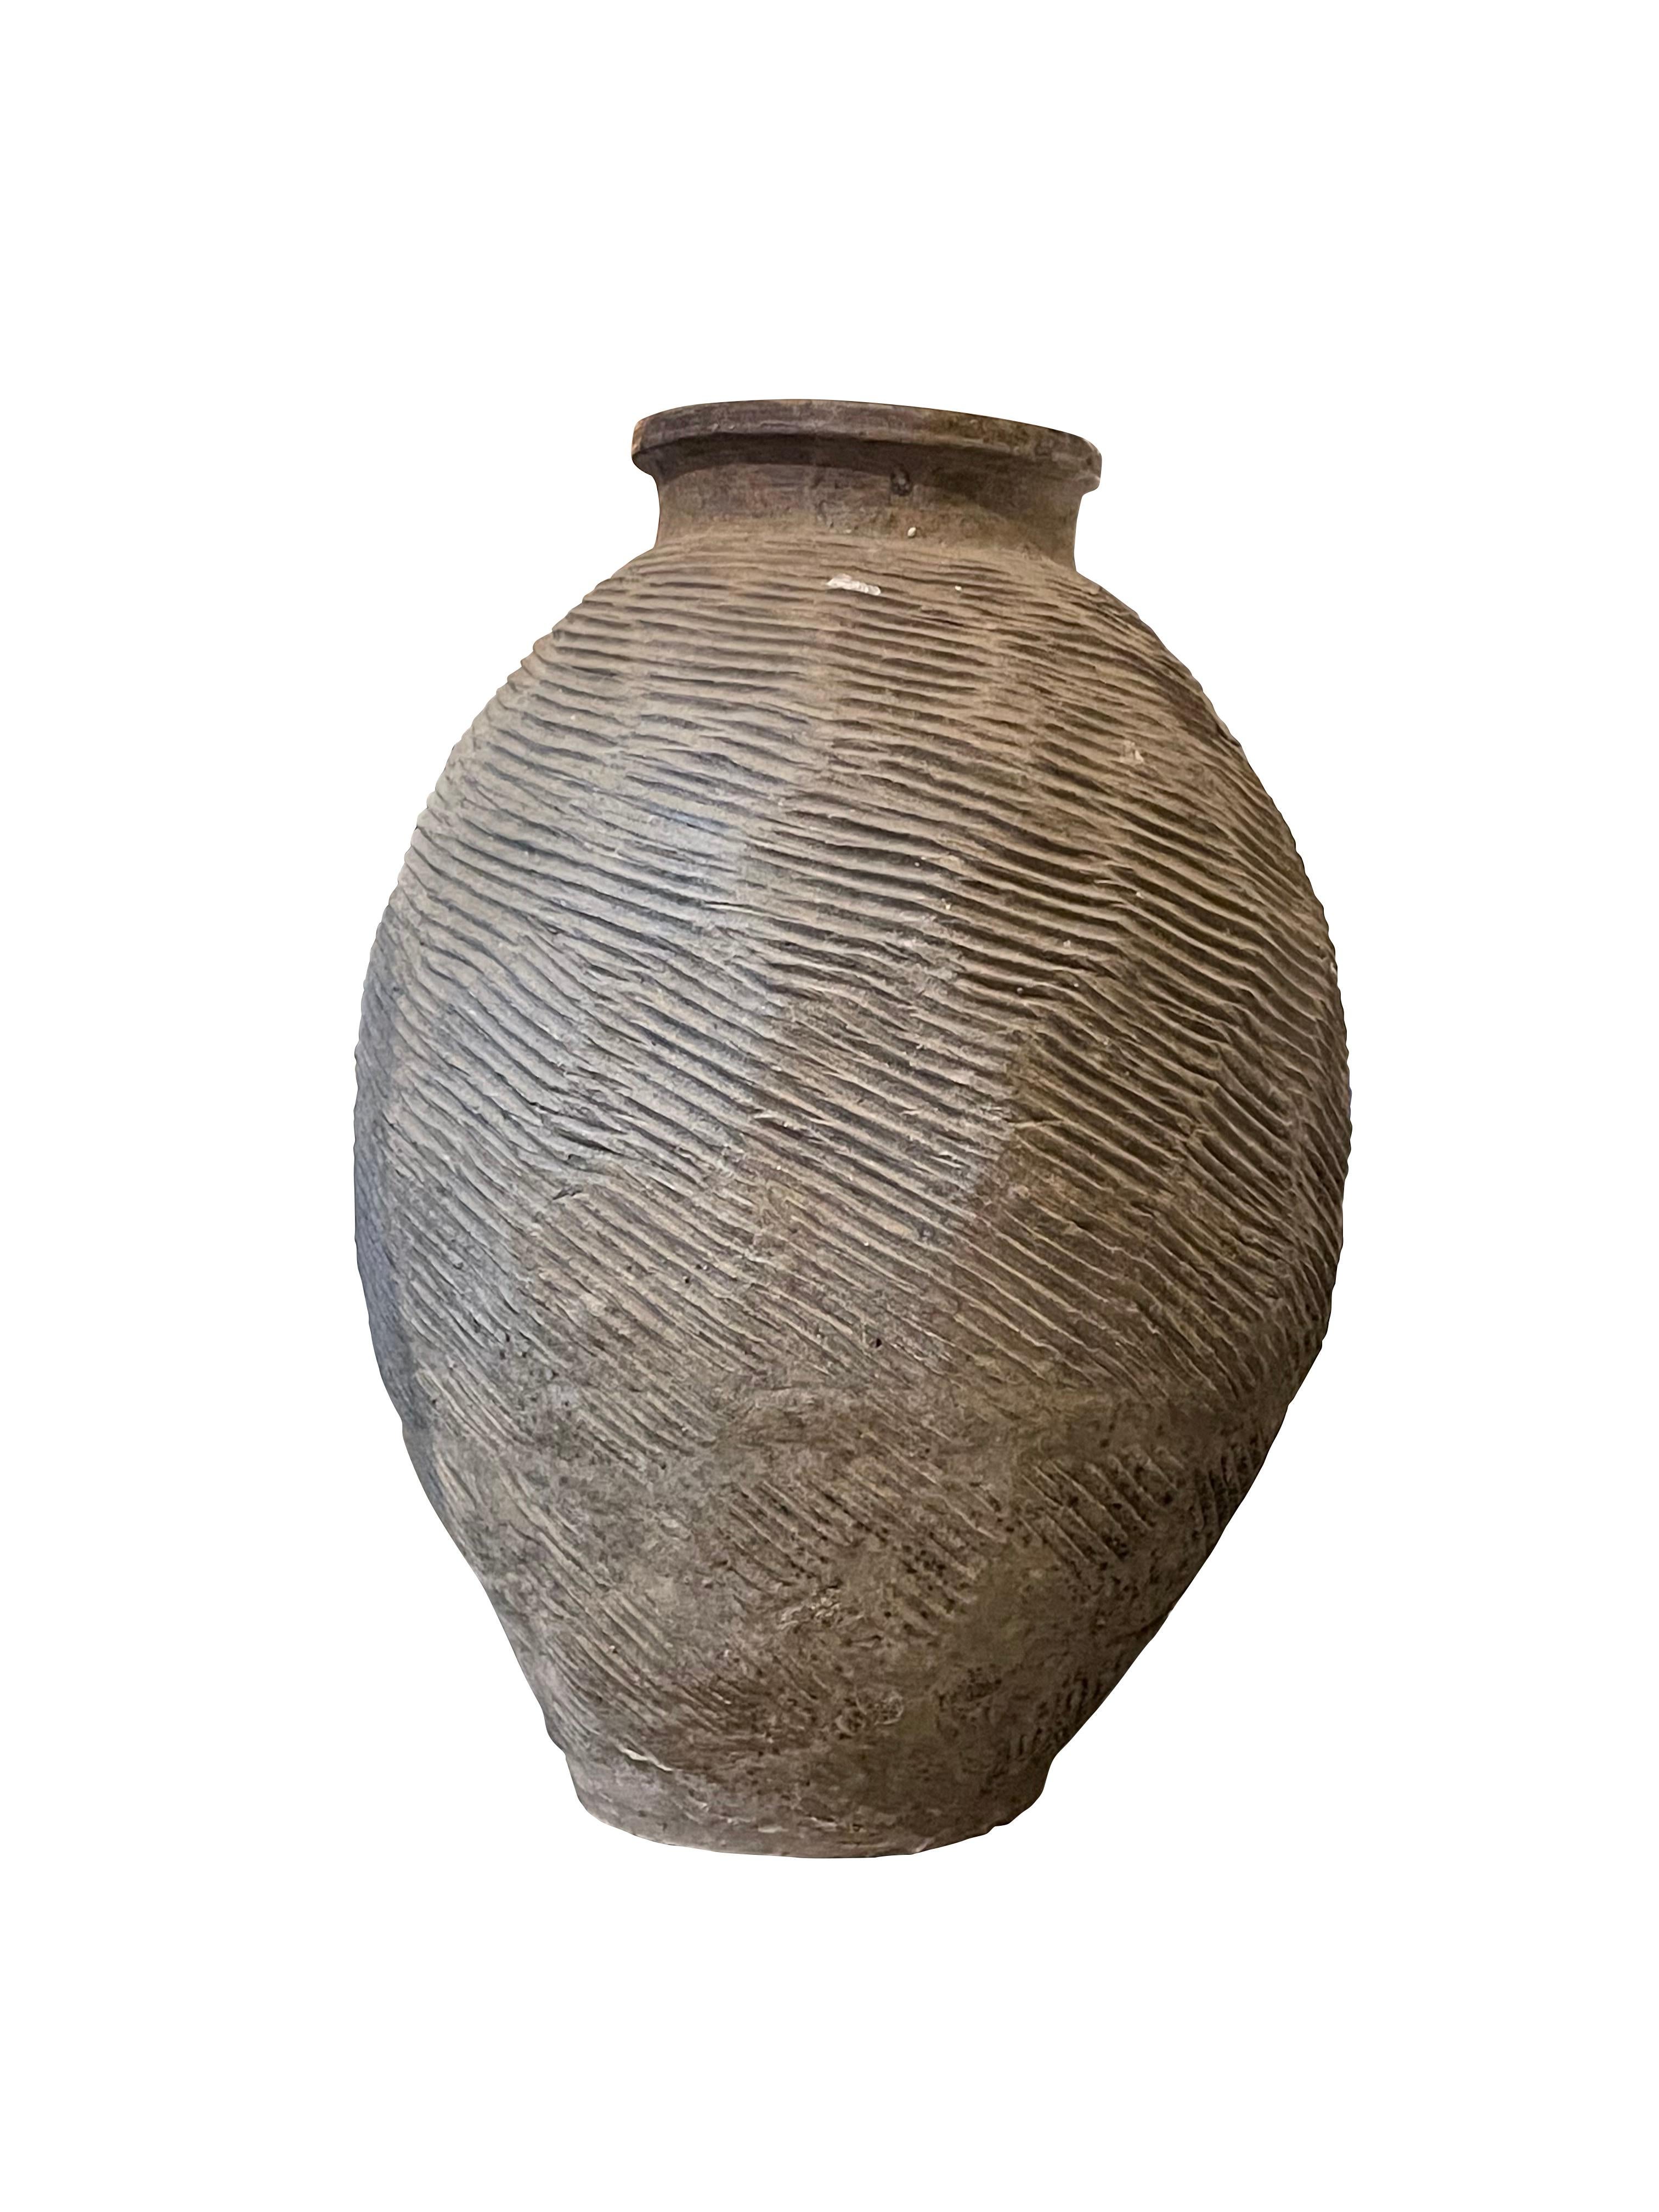 1940's Chinese horizontal raised rib texture vase.
Weathered brown color.
Size range 10